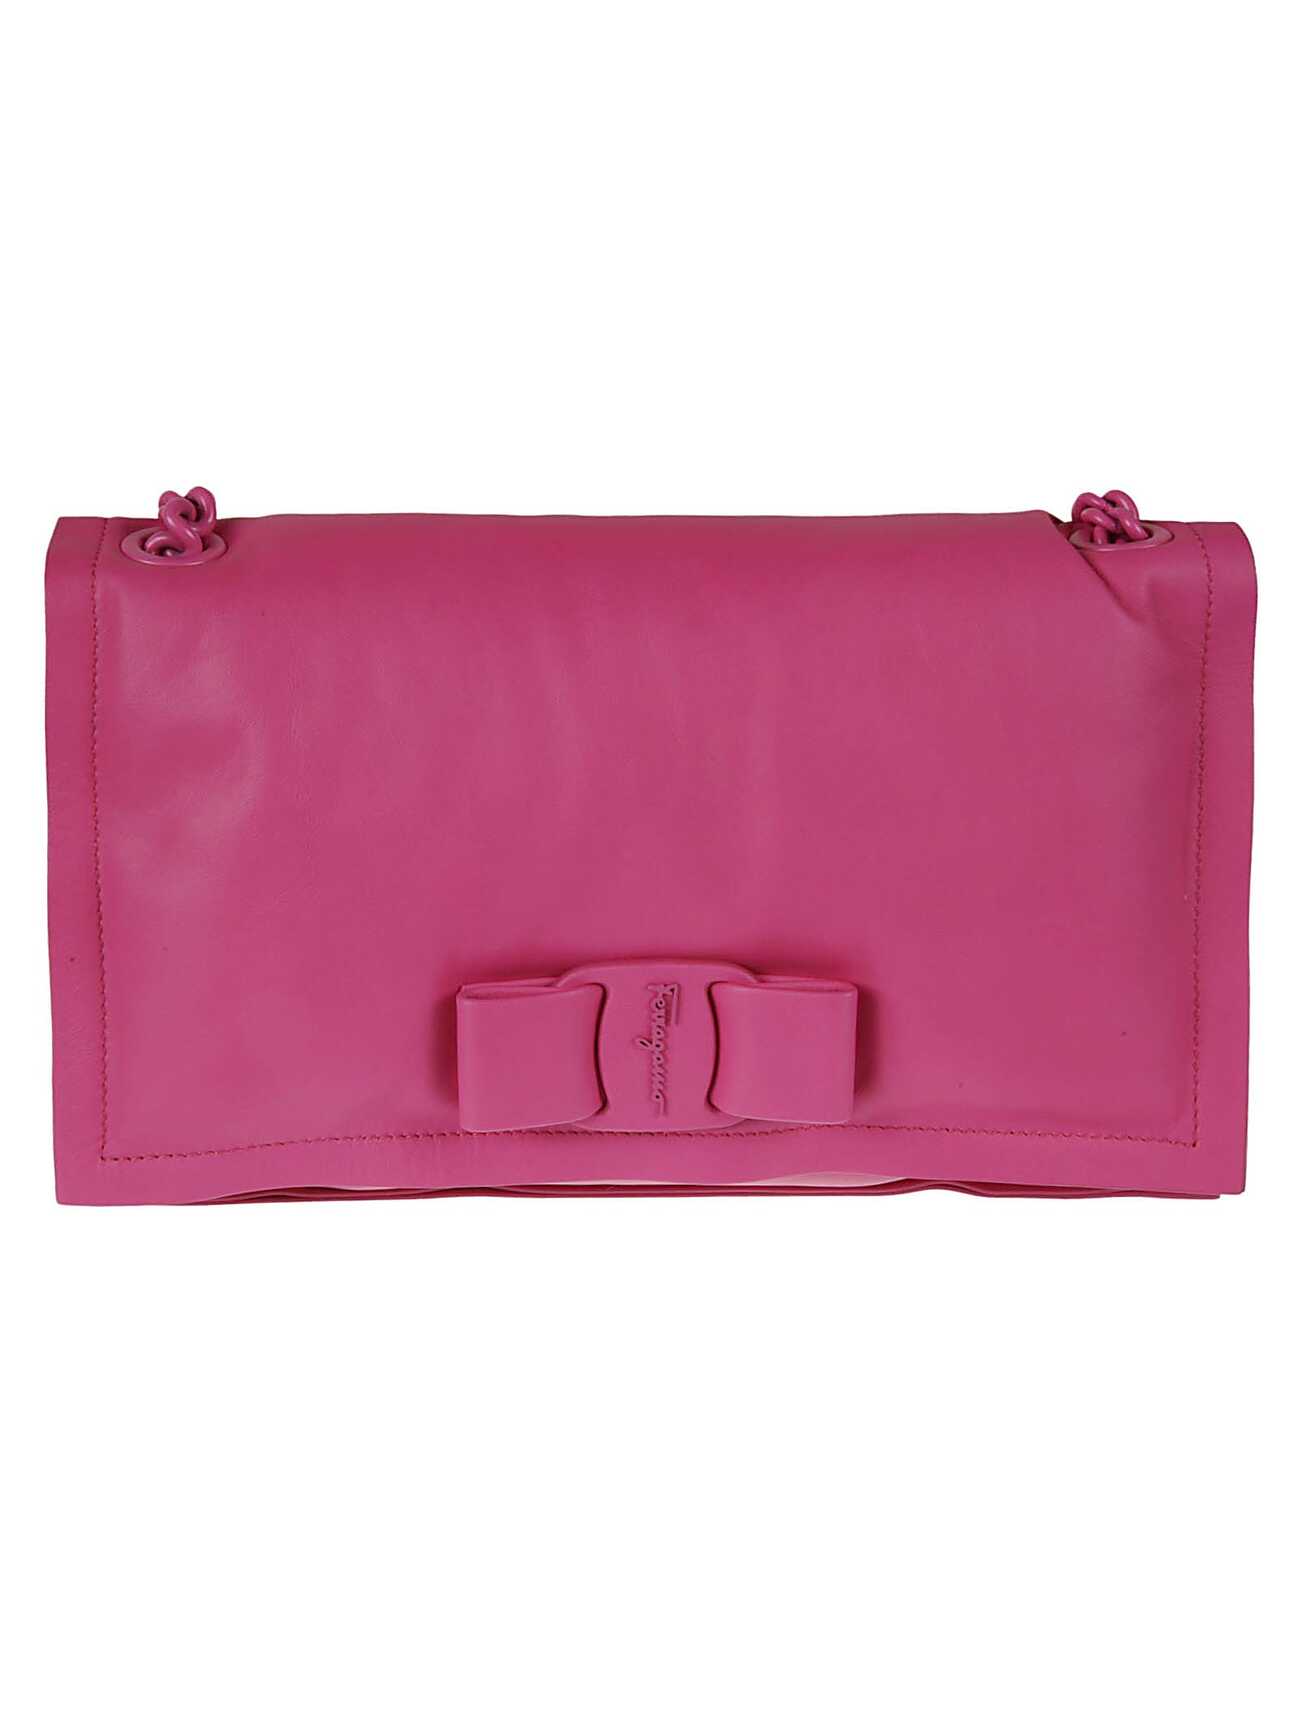 Salvatore Ferragamo Bow Detail Shoulder Bag in pink